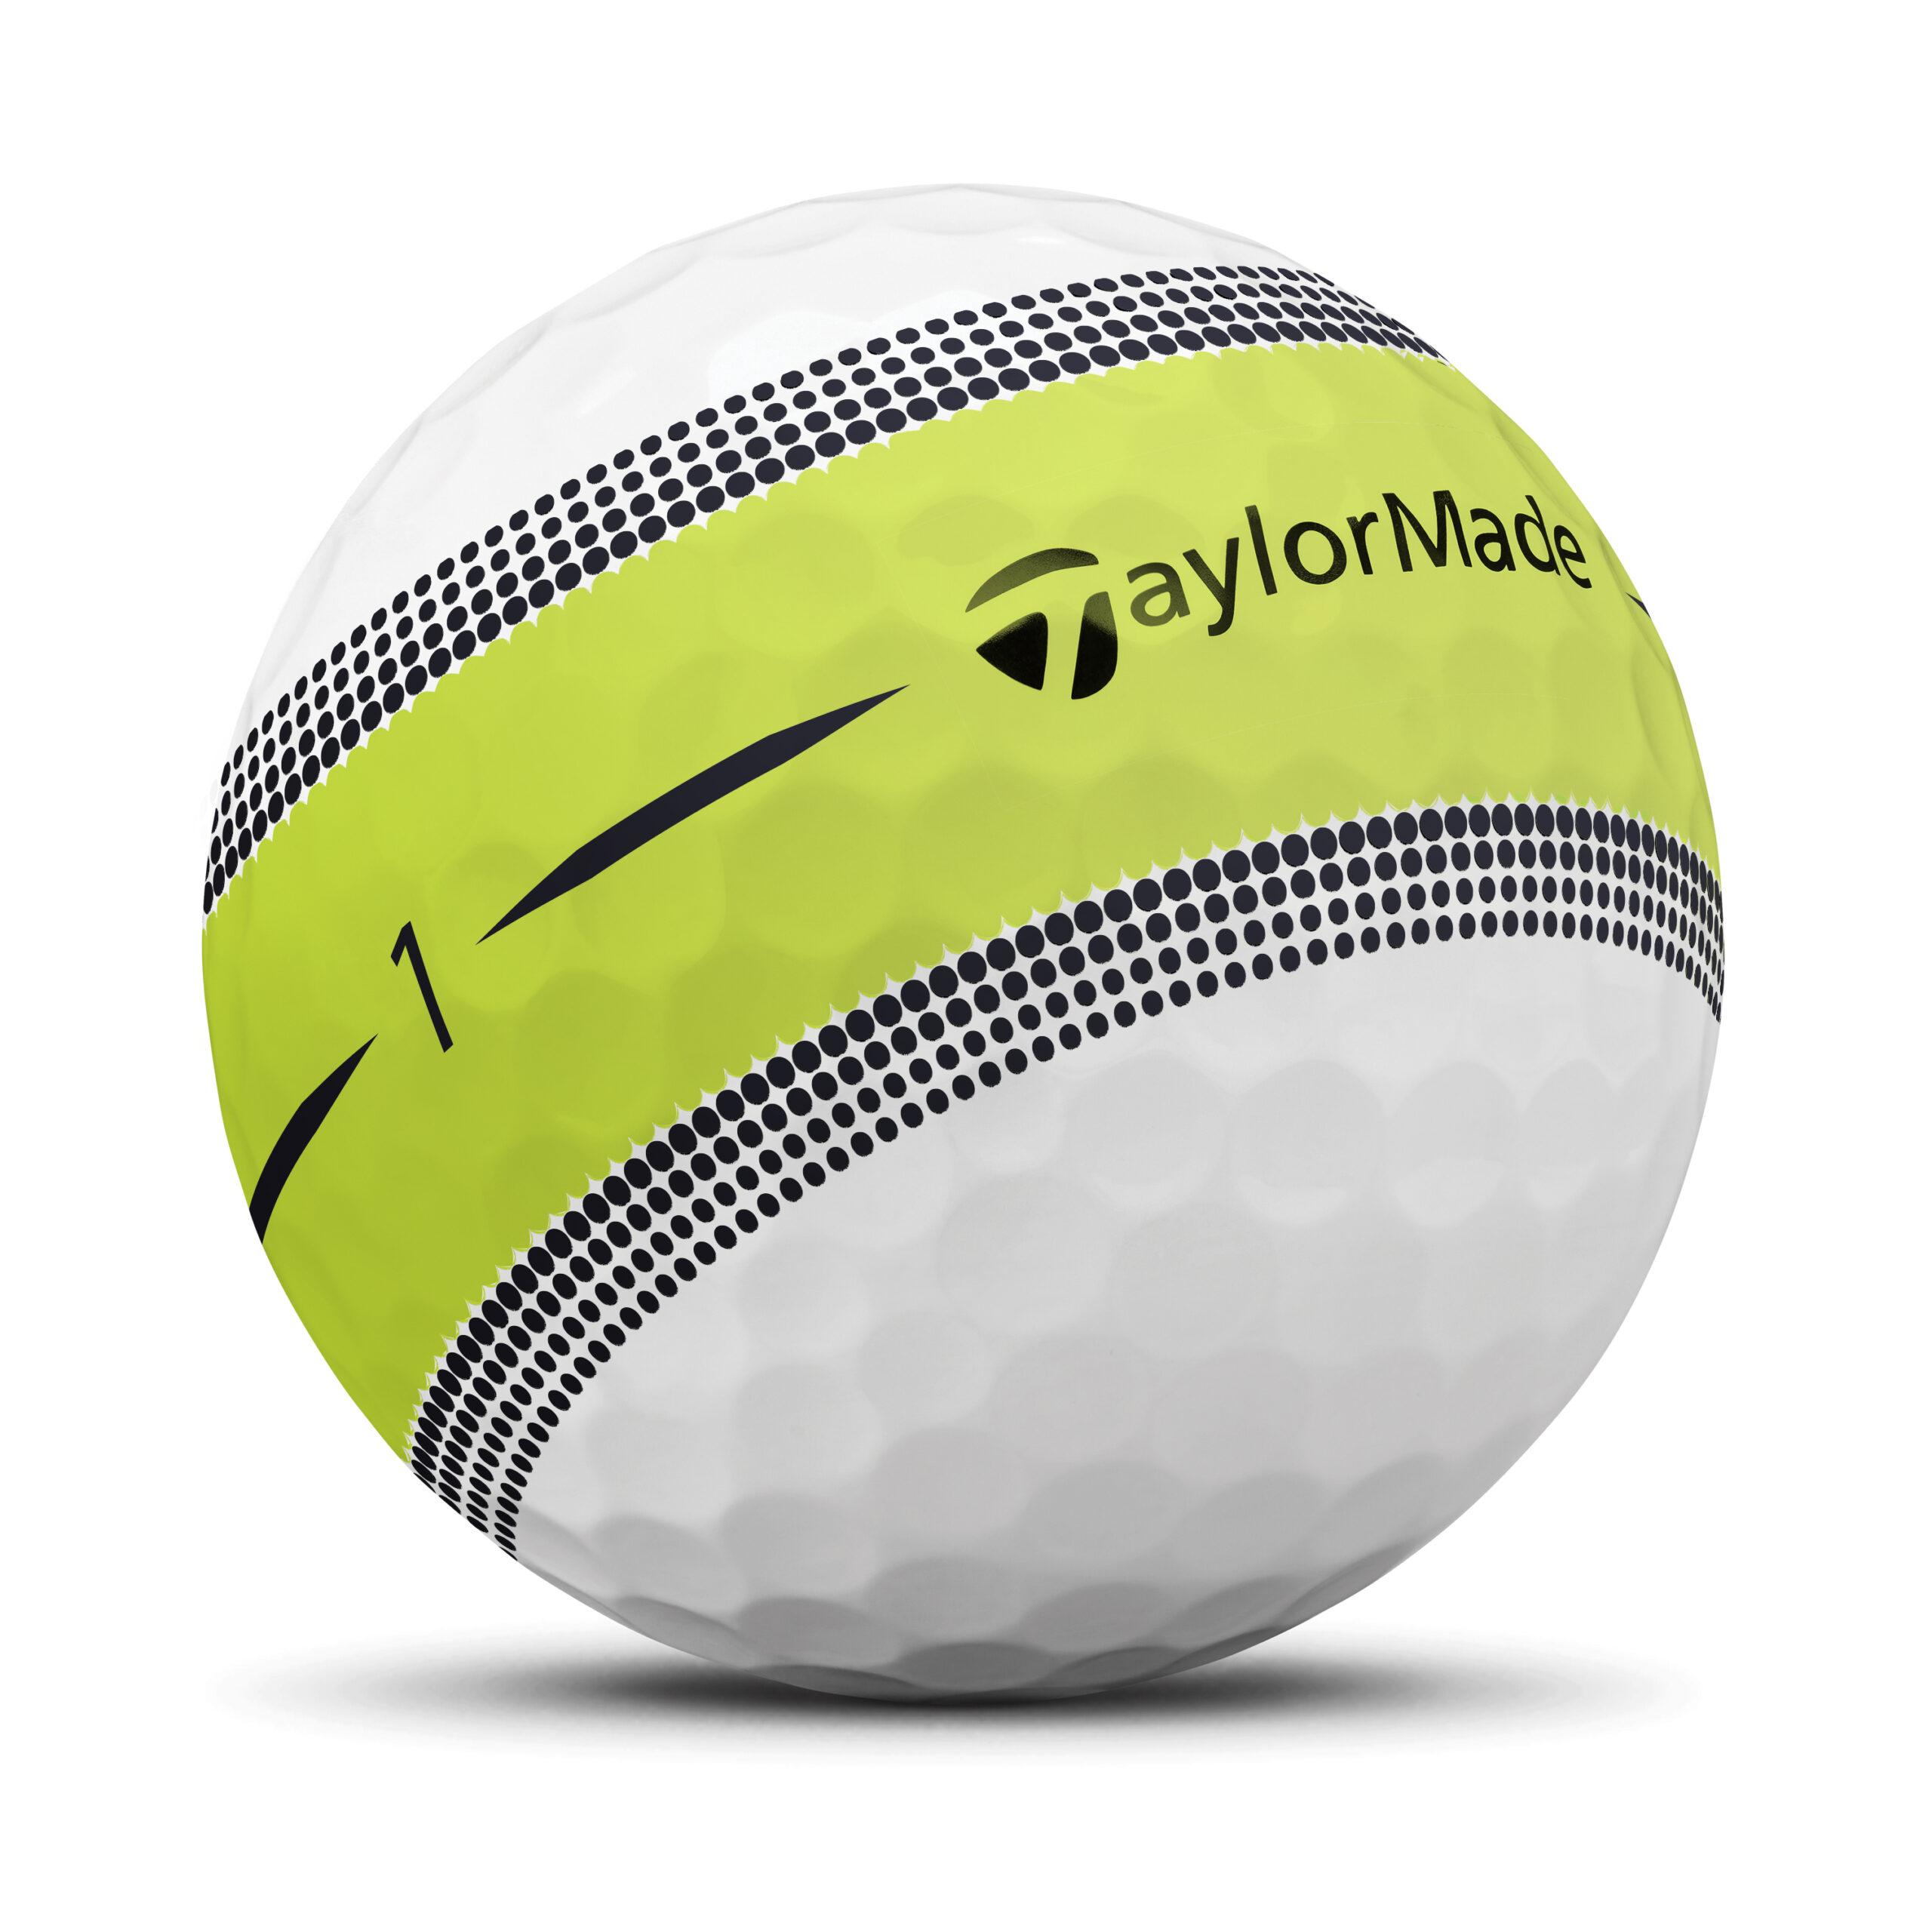 new tour response golf ball